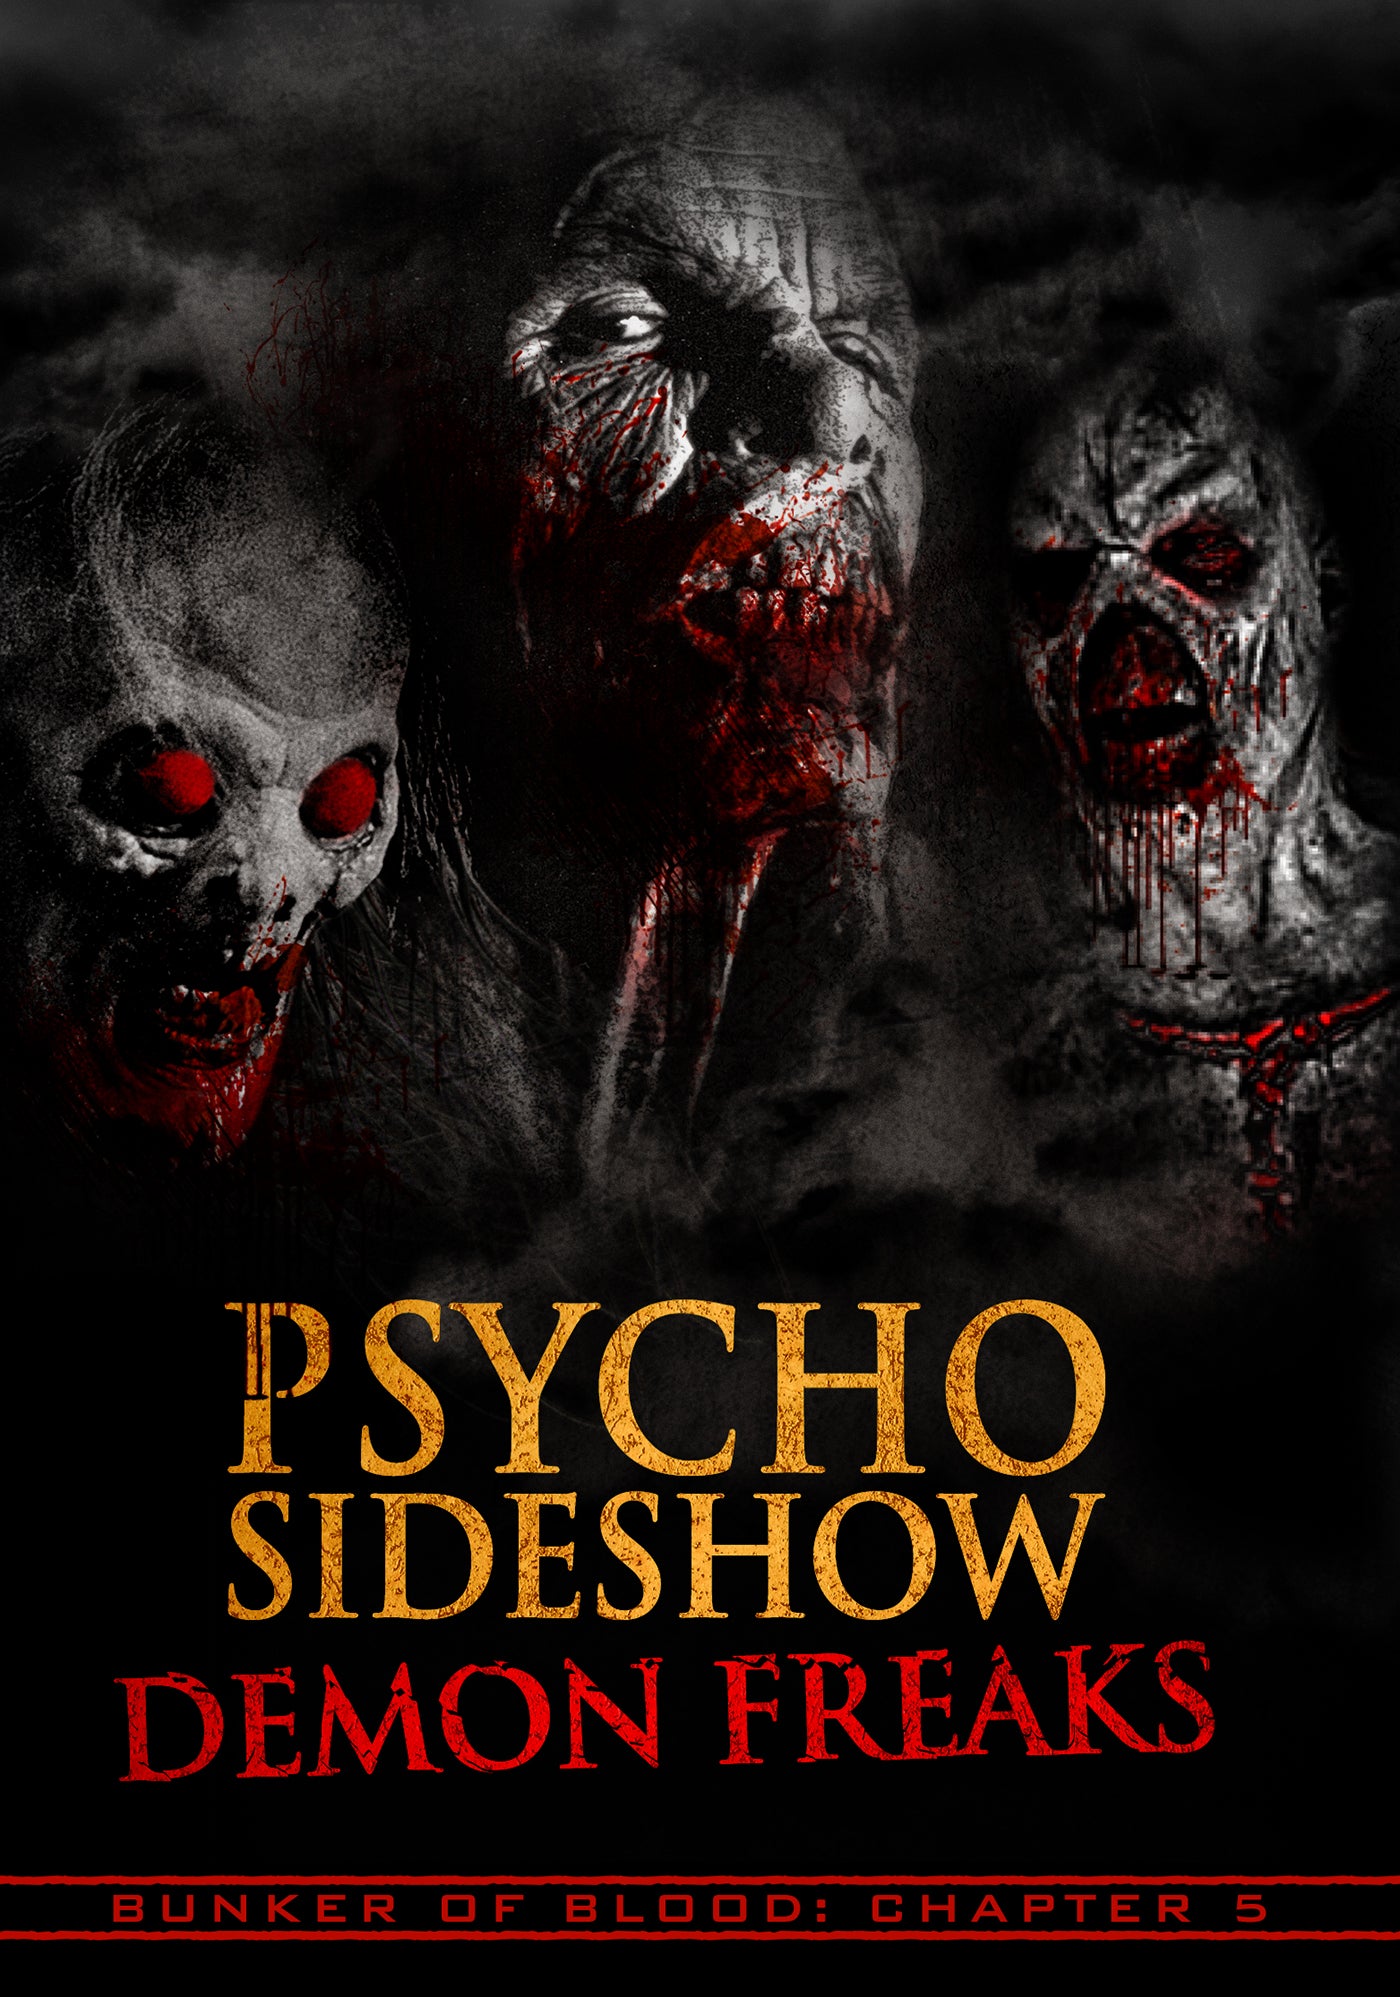 BUNKER OF BLOOD 5: PSYCHO SIDESHOW DEMON FREAKS DVD